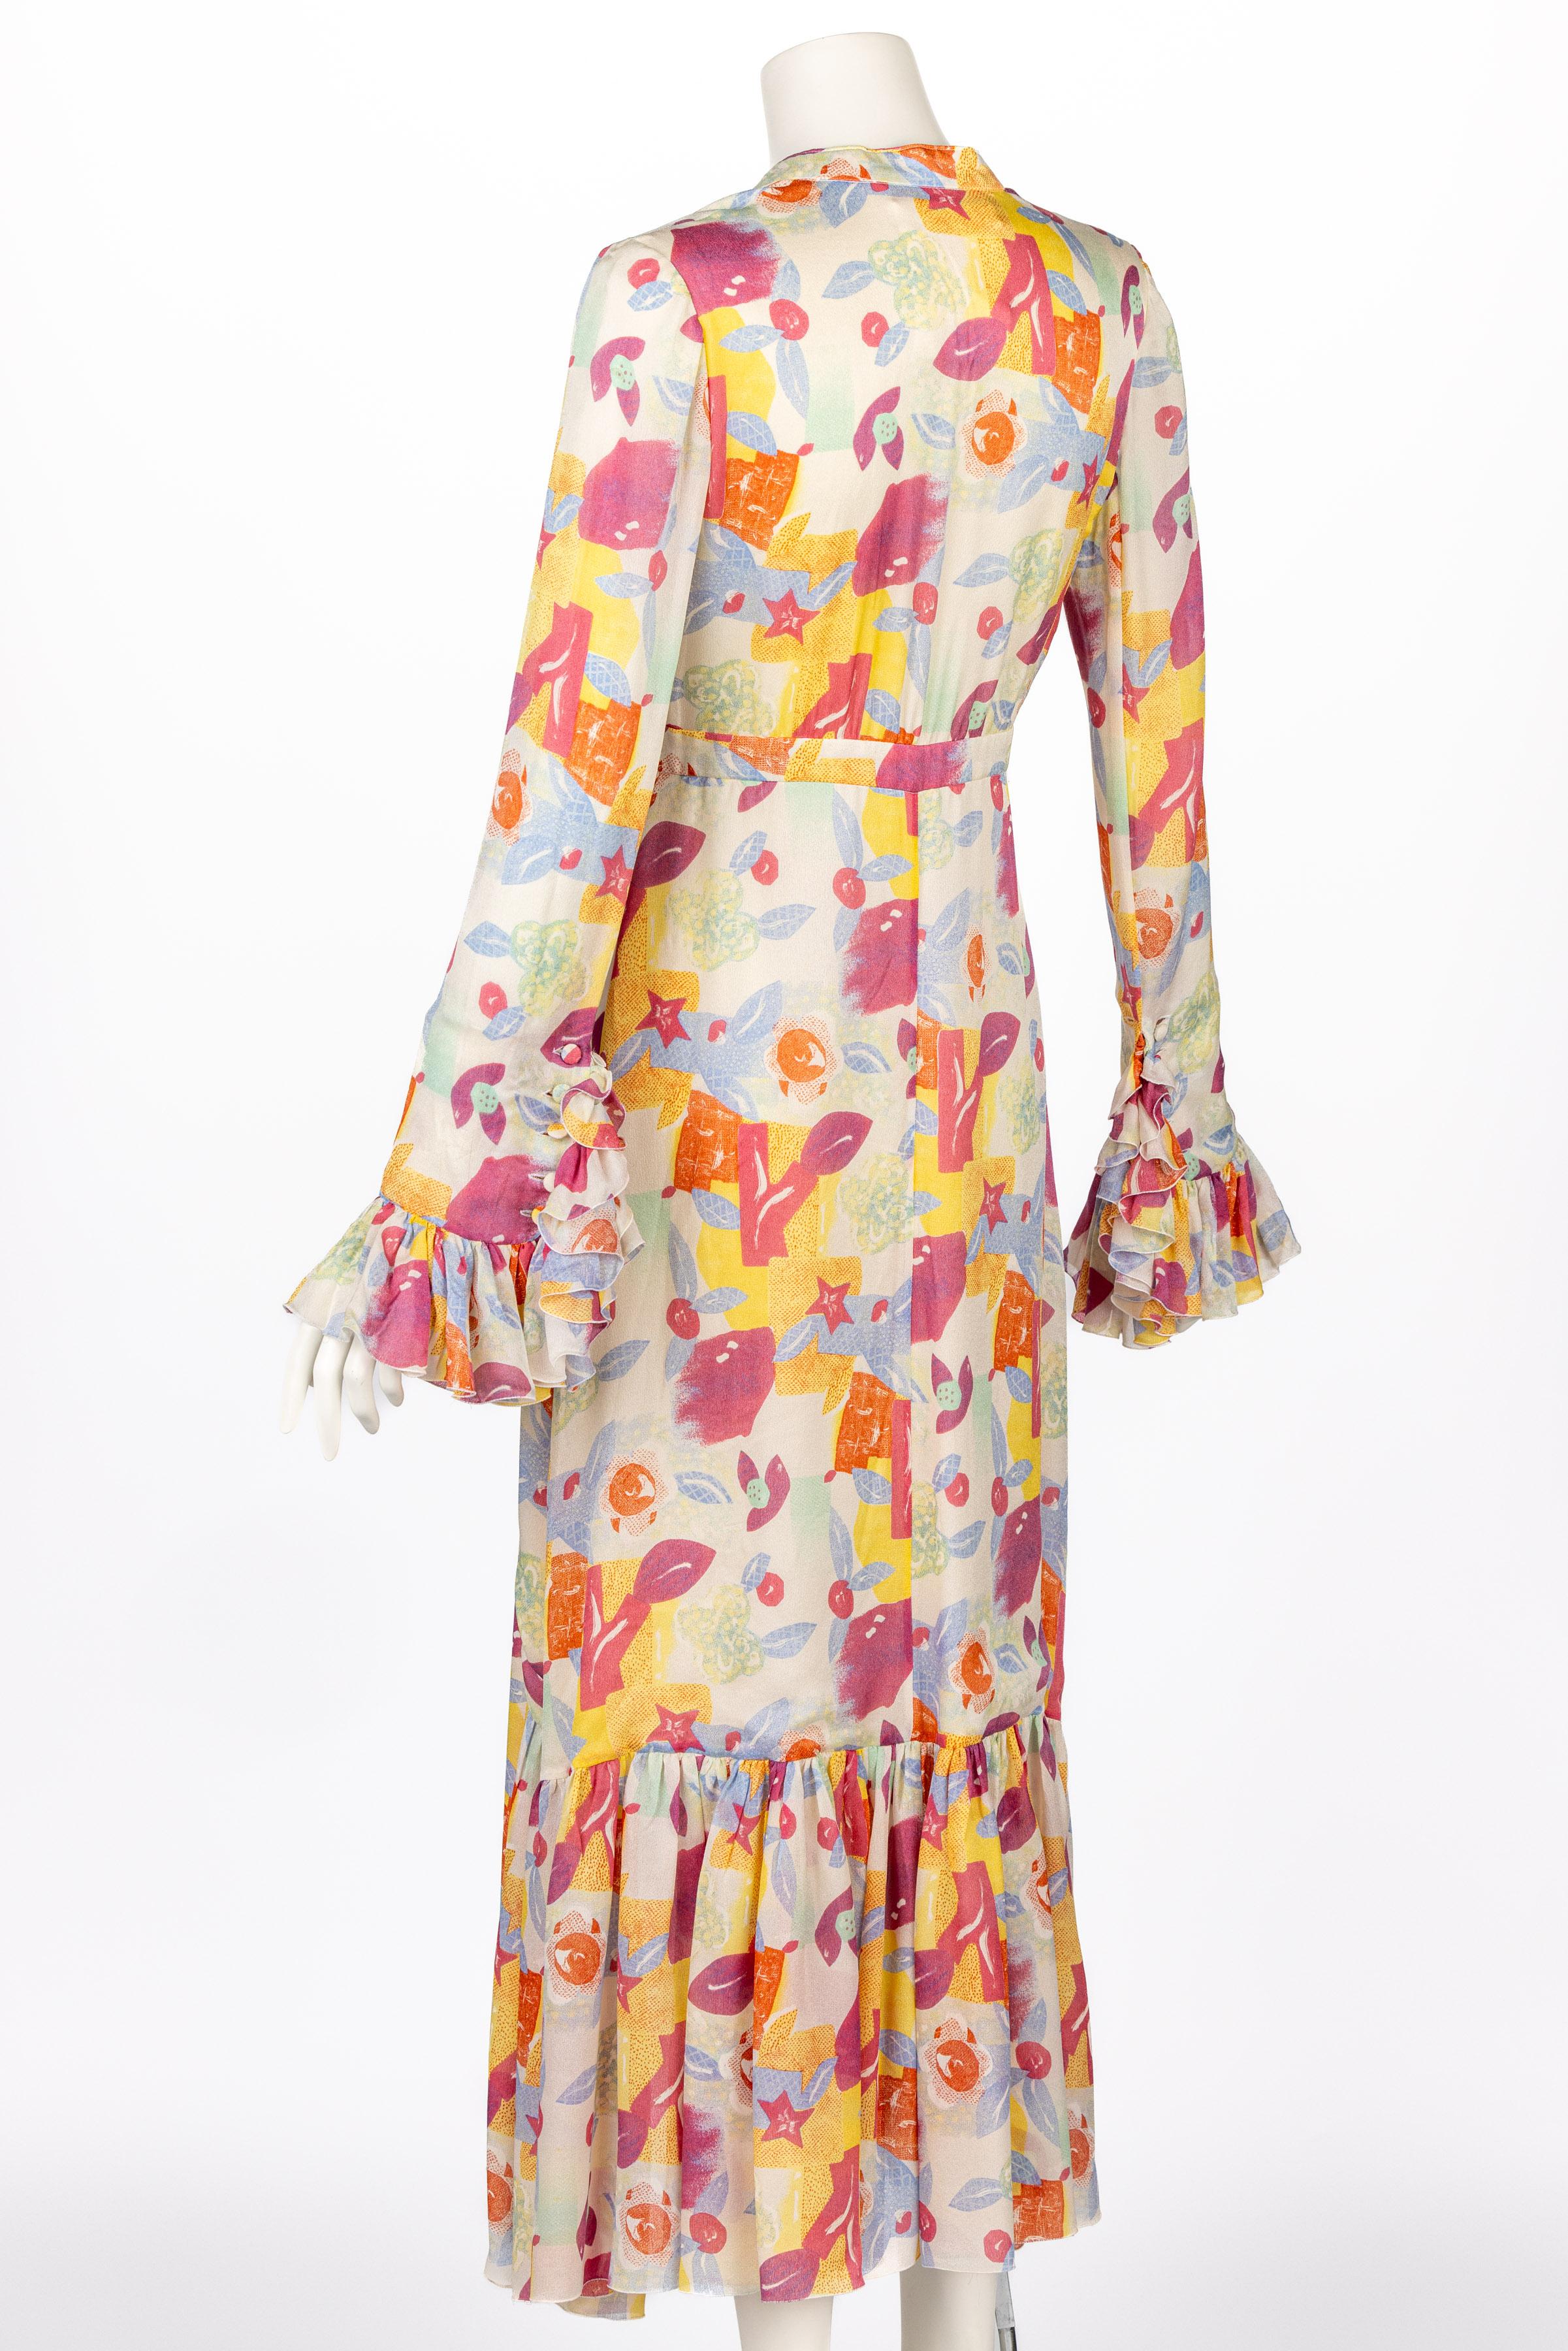 Chloe Karl Lagerfeld Floral Printed Silk Dress S/S 1993 Vogue Documented 3